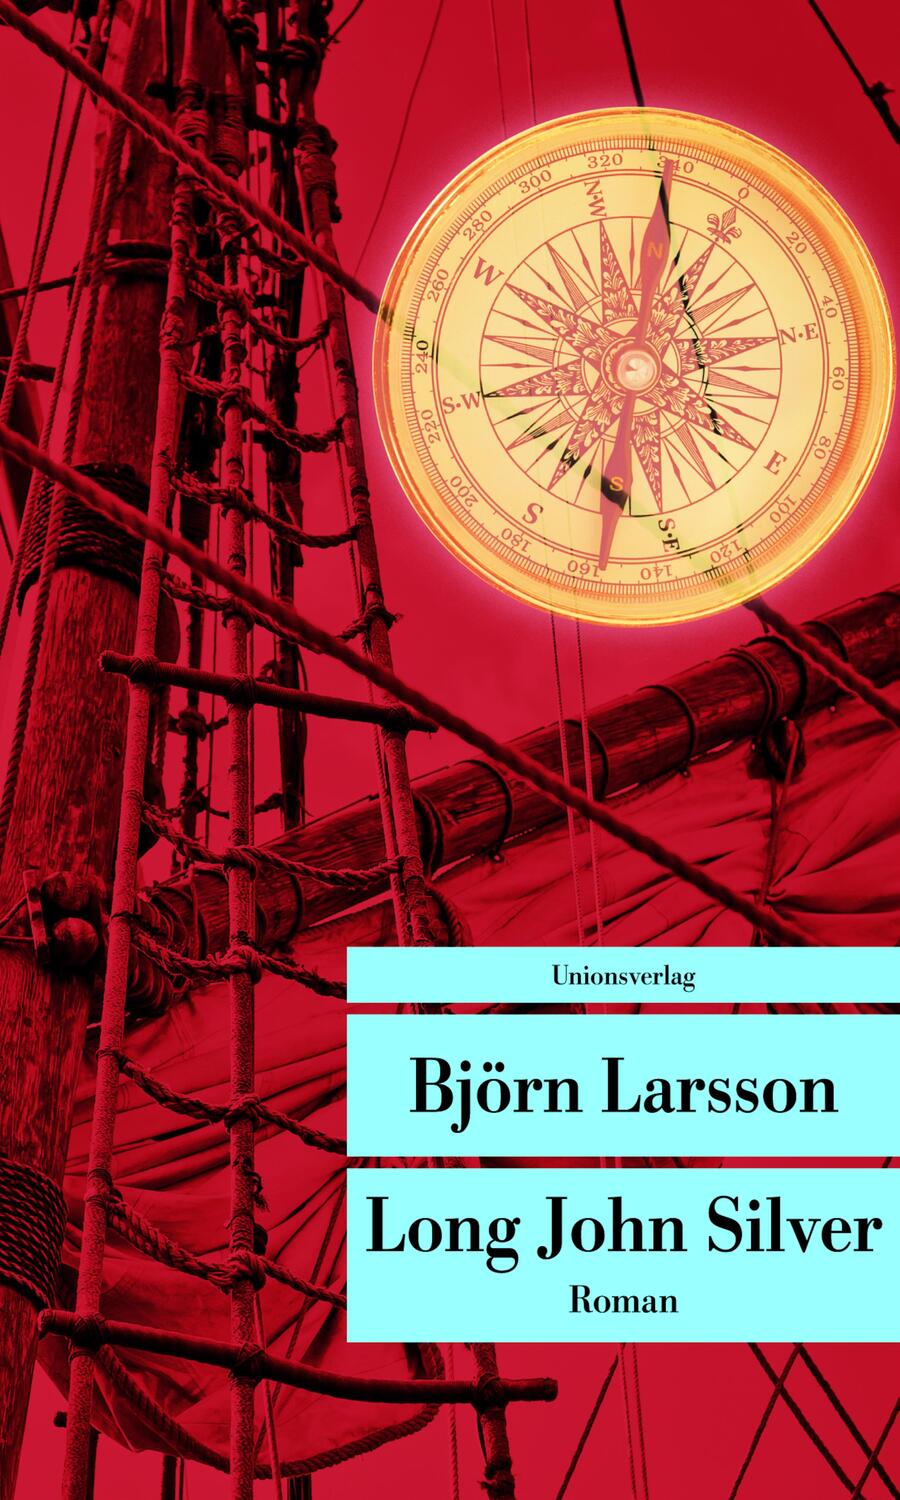 Long John Silver - Larsson, Björn